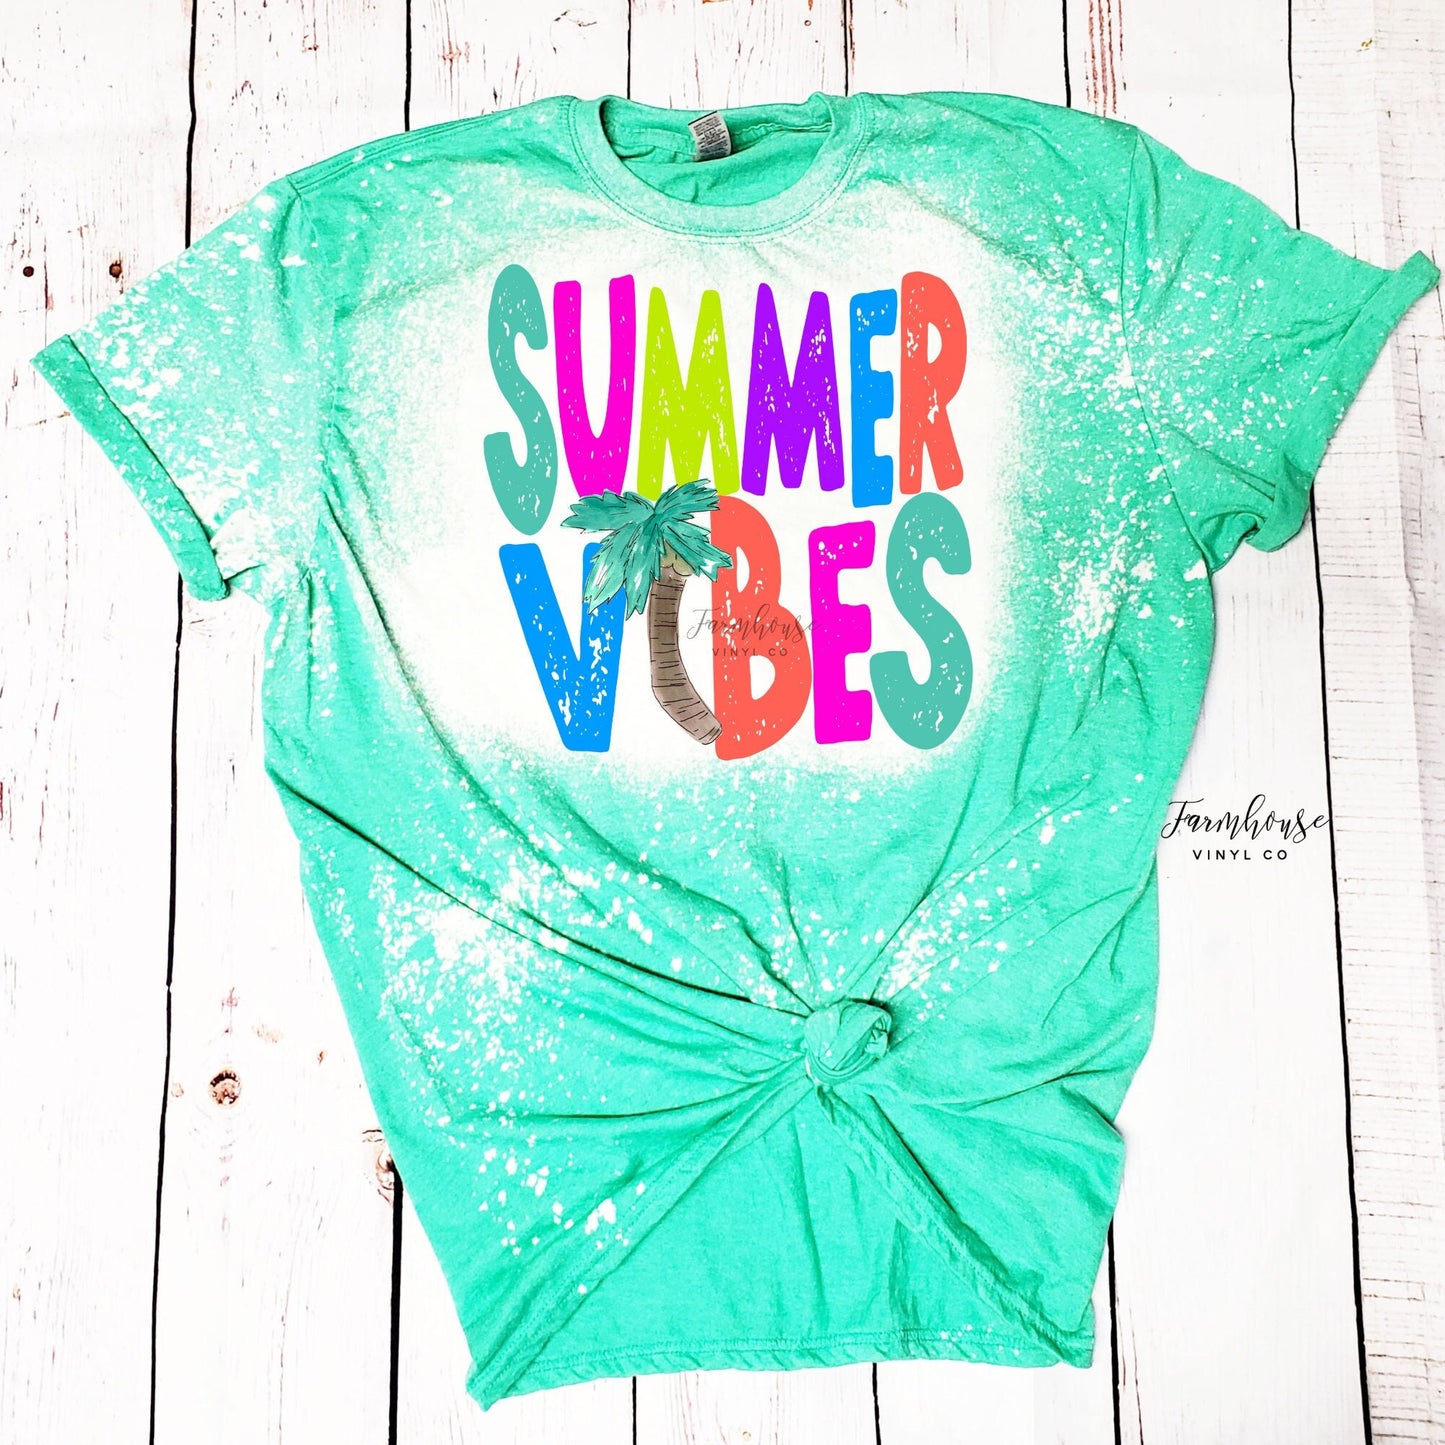 Summer Vibes Shirt - Farmhouse Vinyl Co